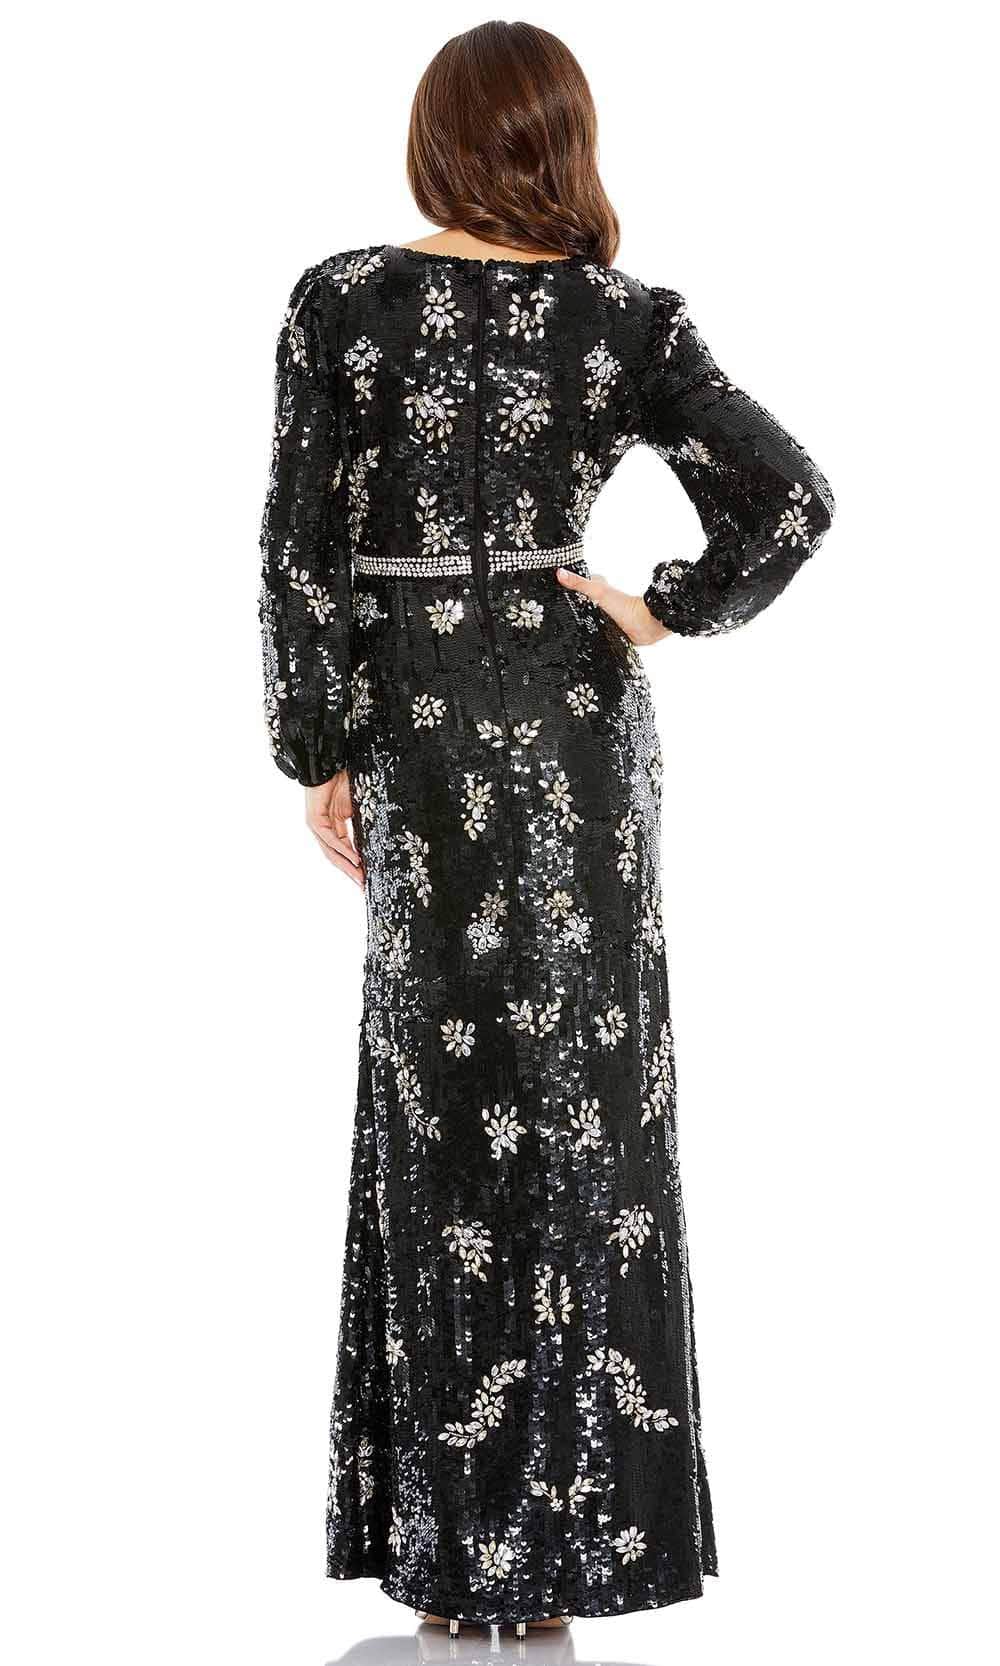 Mac Duggal 93616 - Rhinestone Embellished Floral Evening Dress Evening Dresses